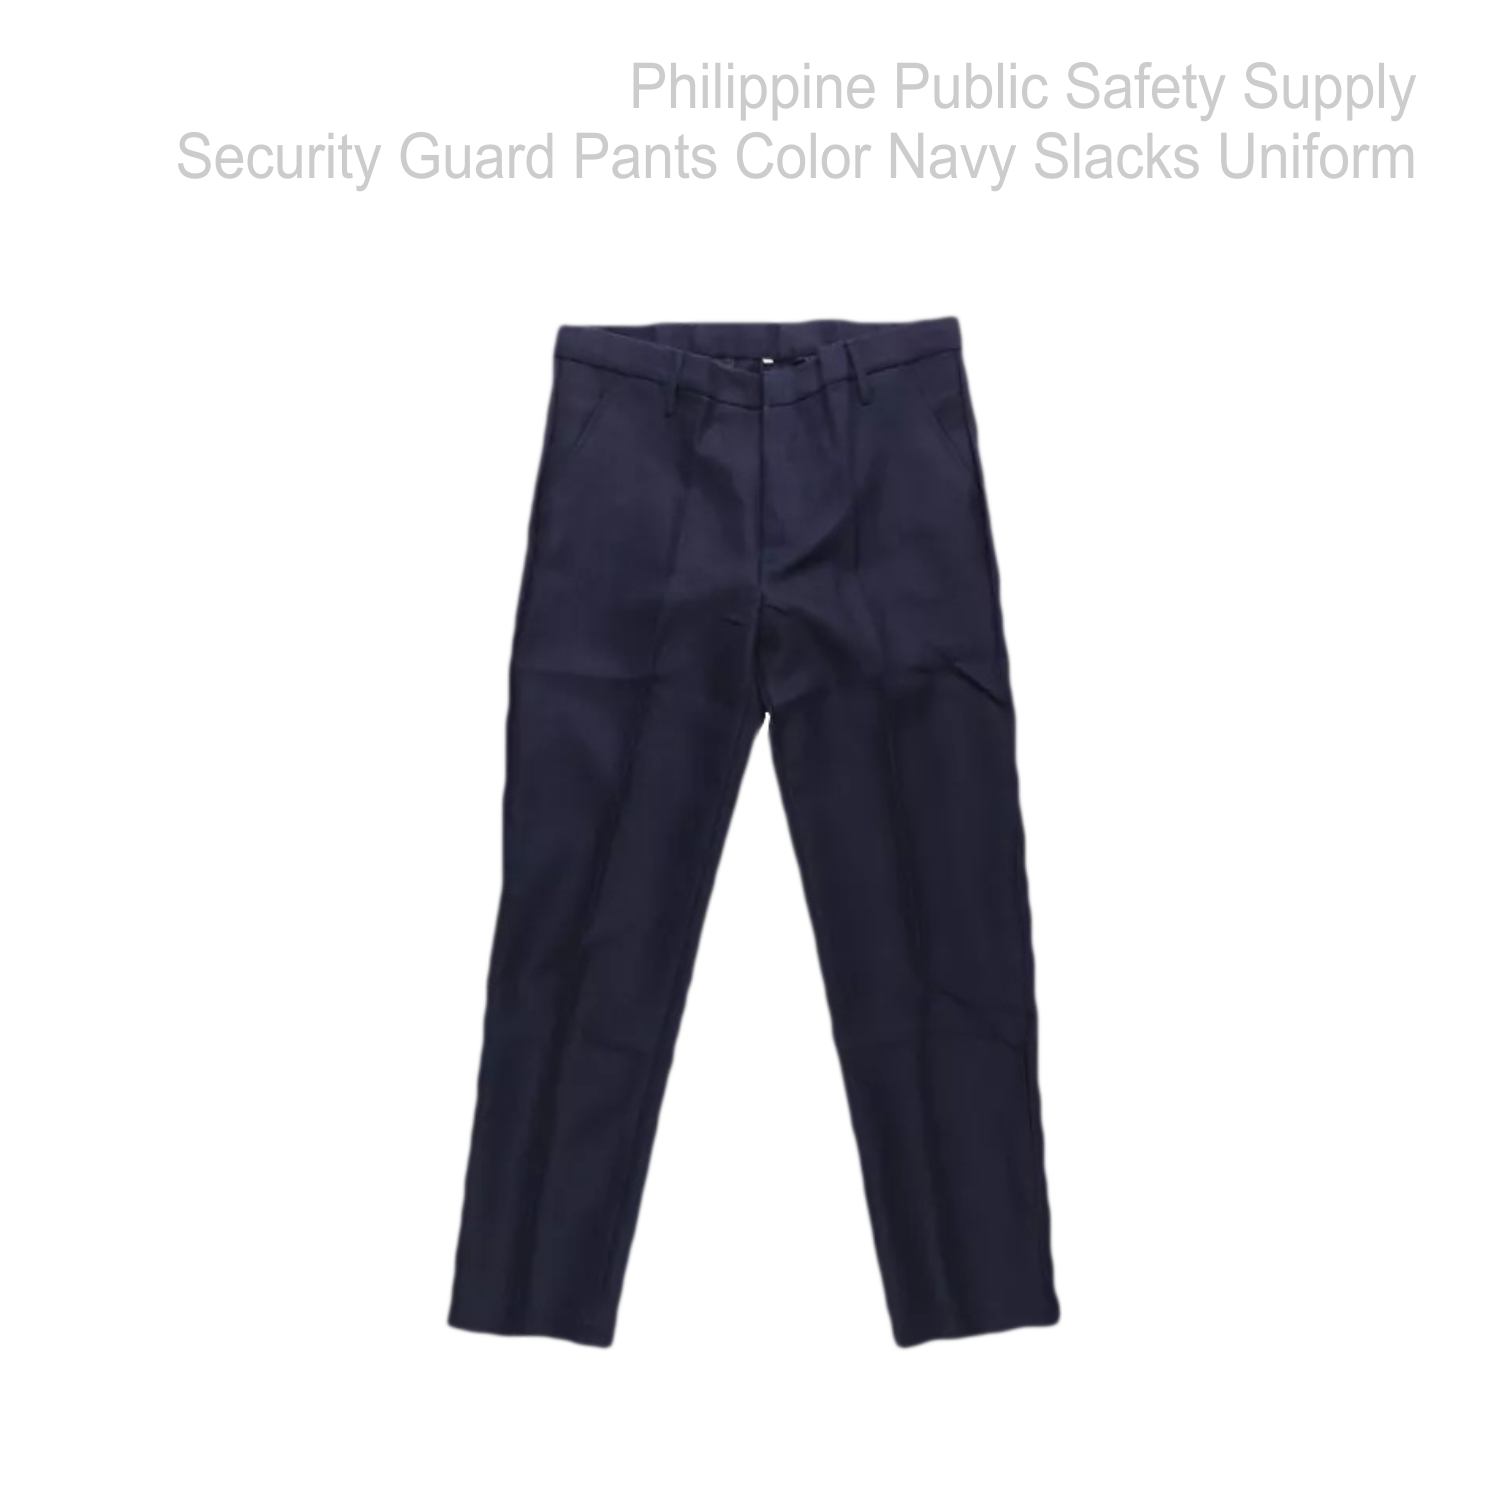 Security Guard Pants, Security Uniform Pants